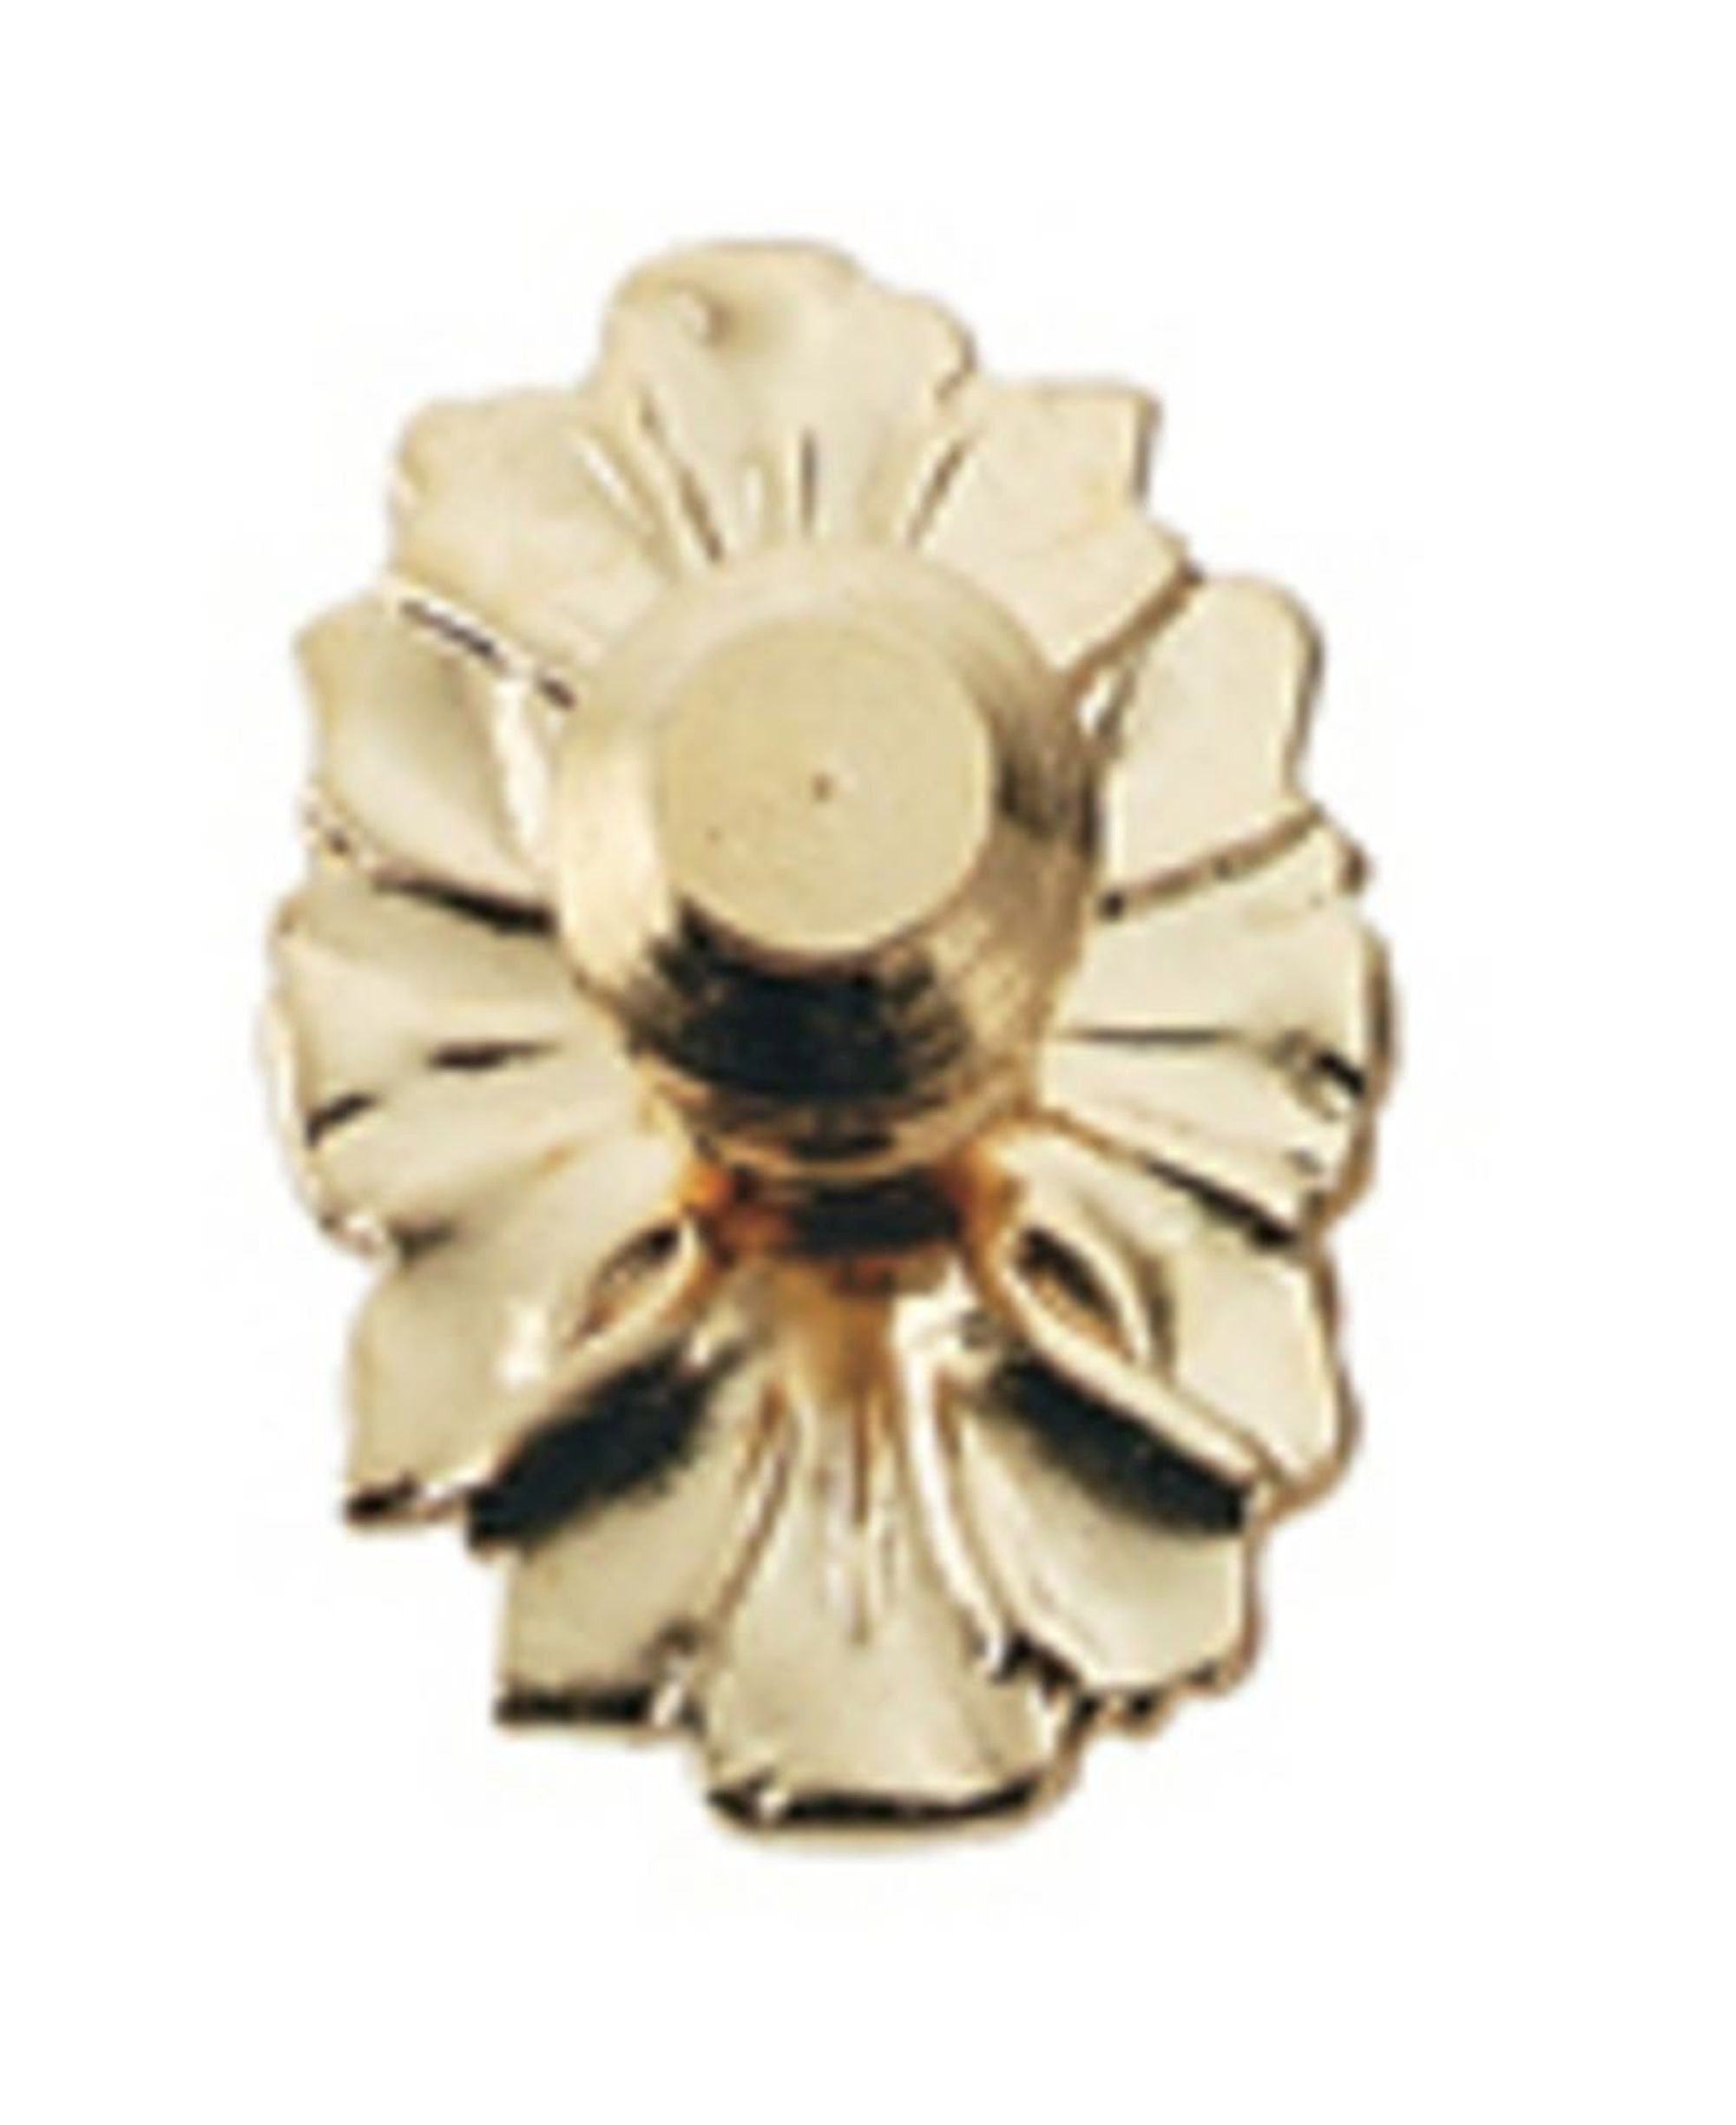 Dollhouse Miniature Gold Plated Medallion Doorknob